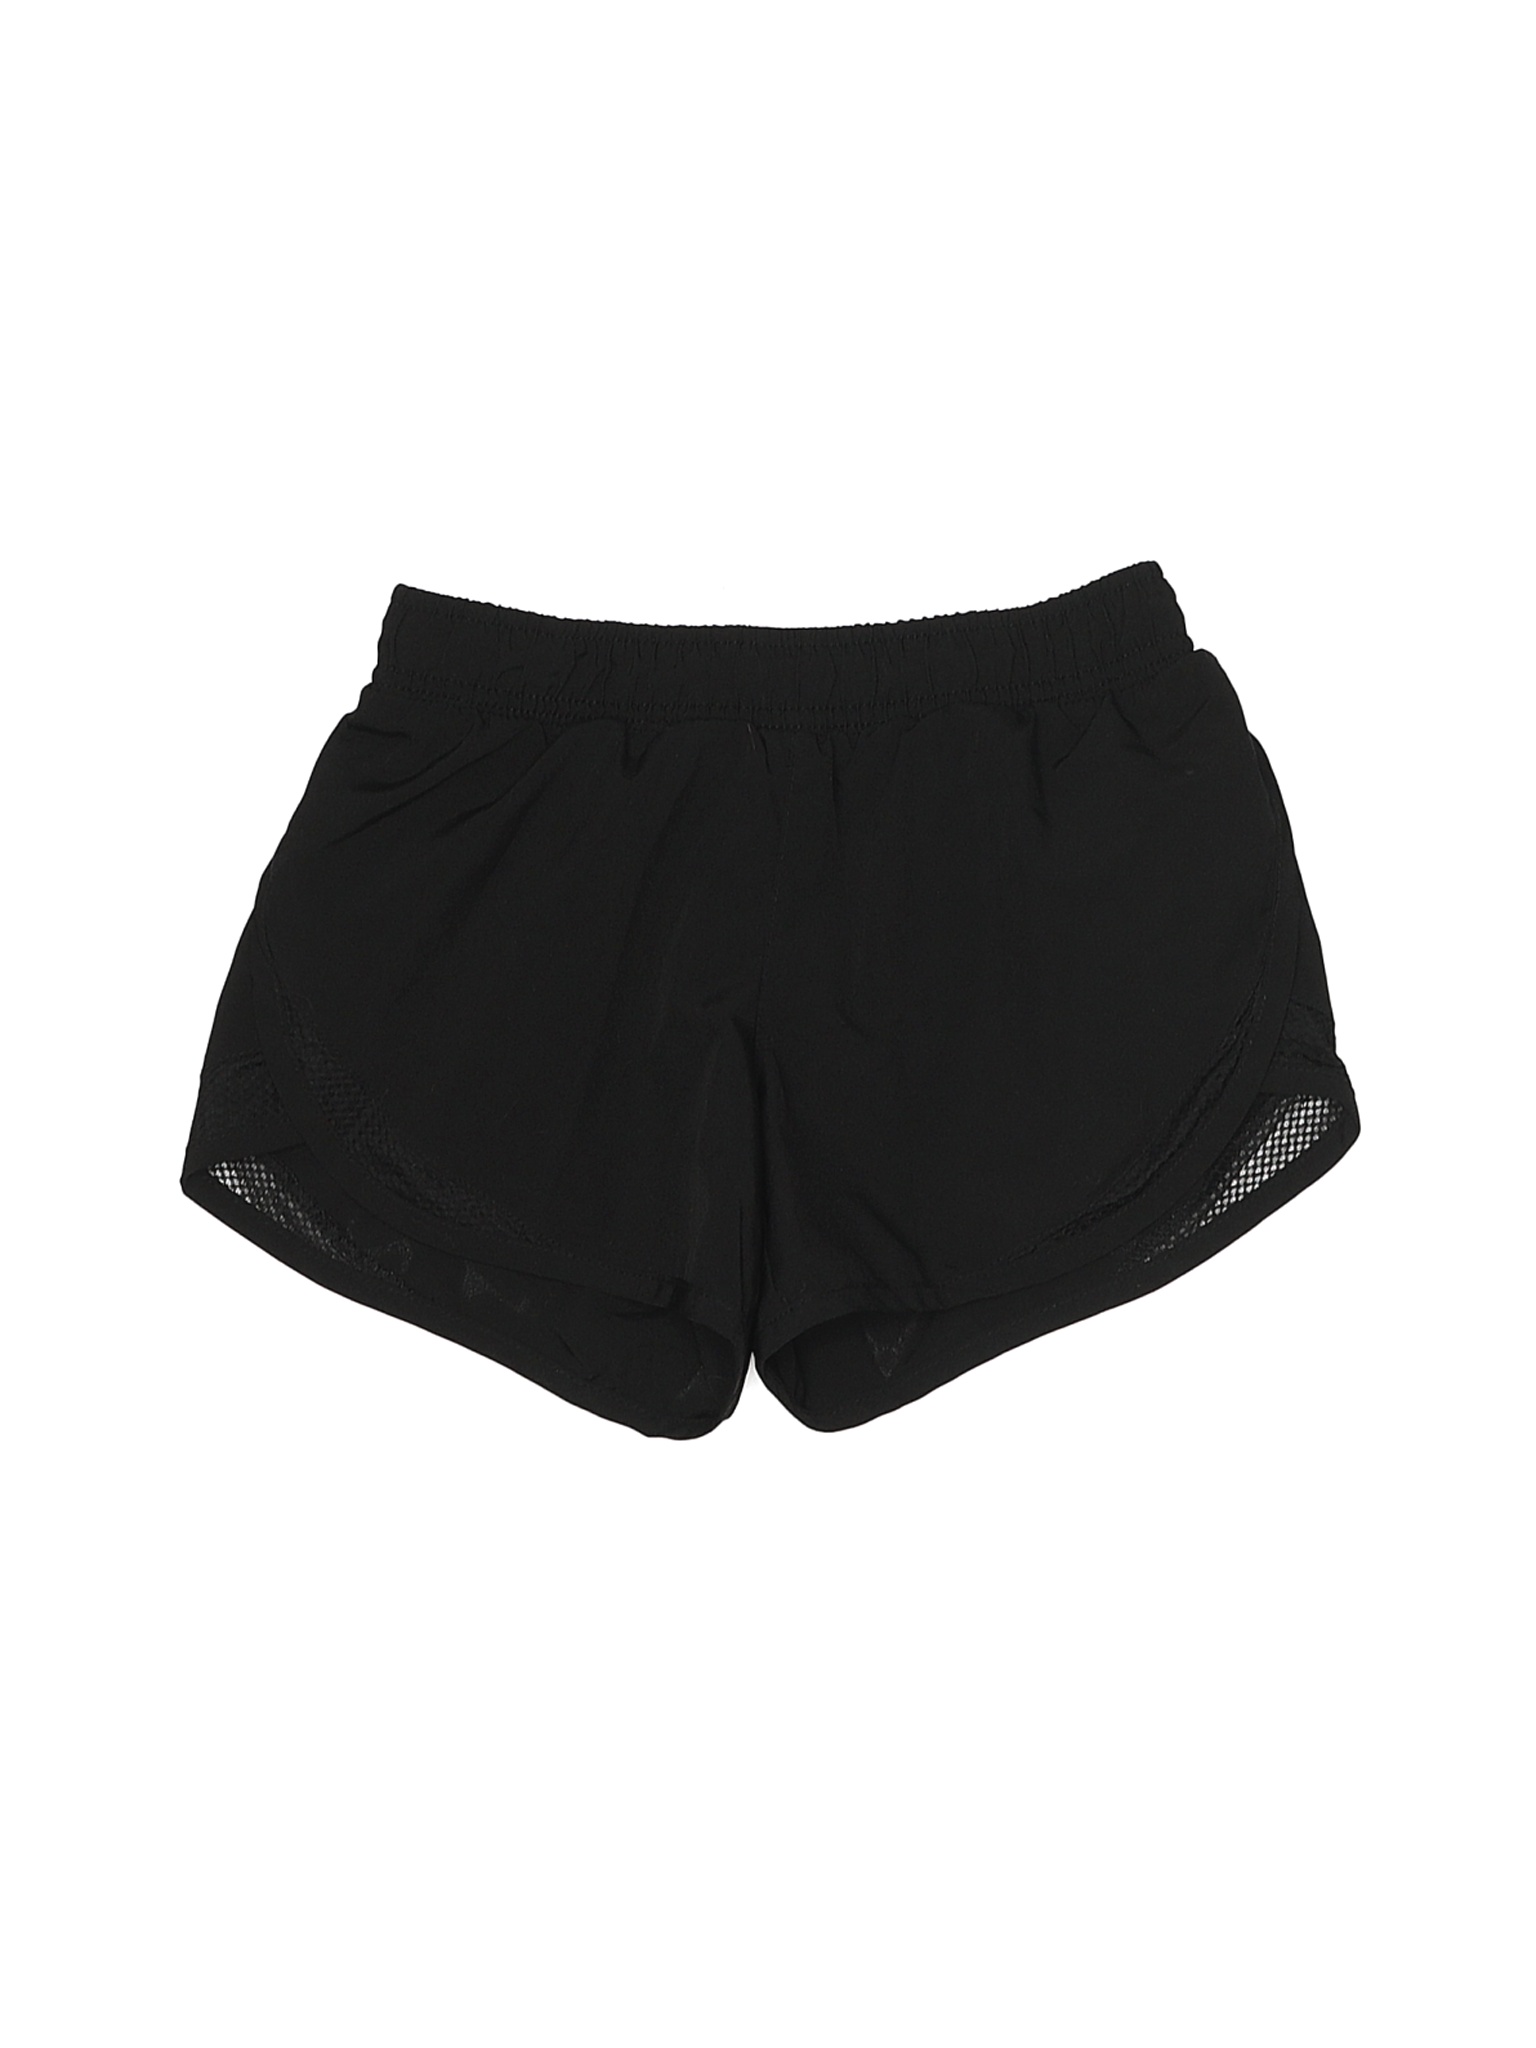 Active by Old Navy Girls Black Athletic Shorts 8 | eBay